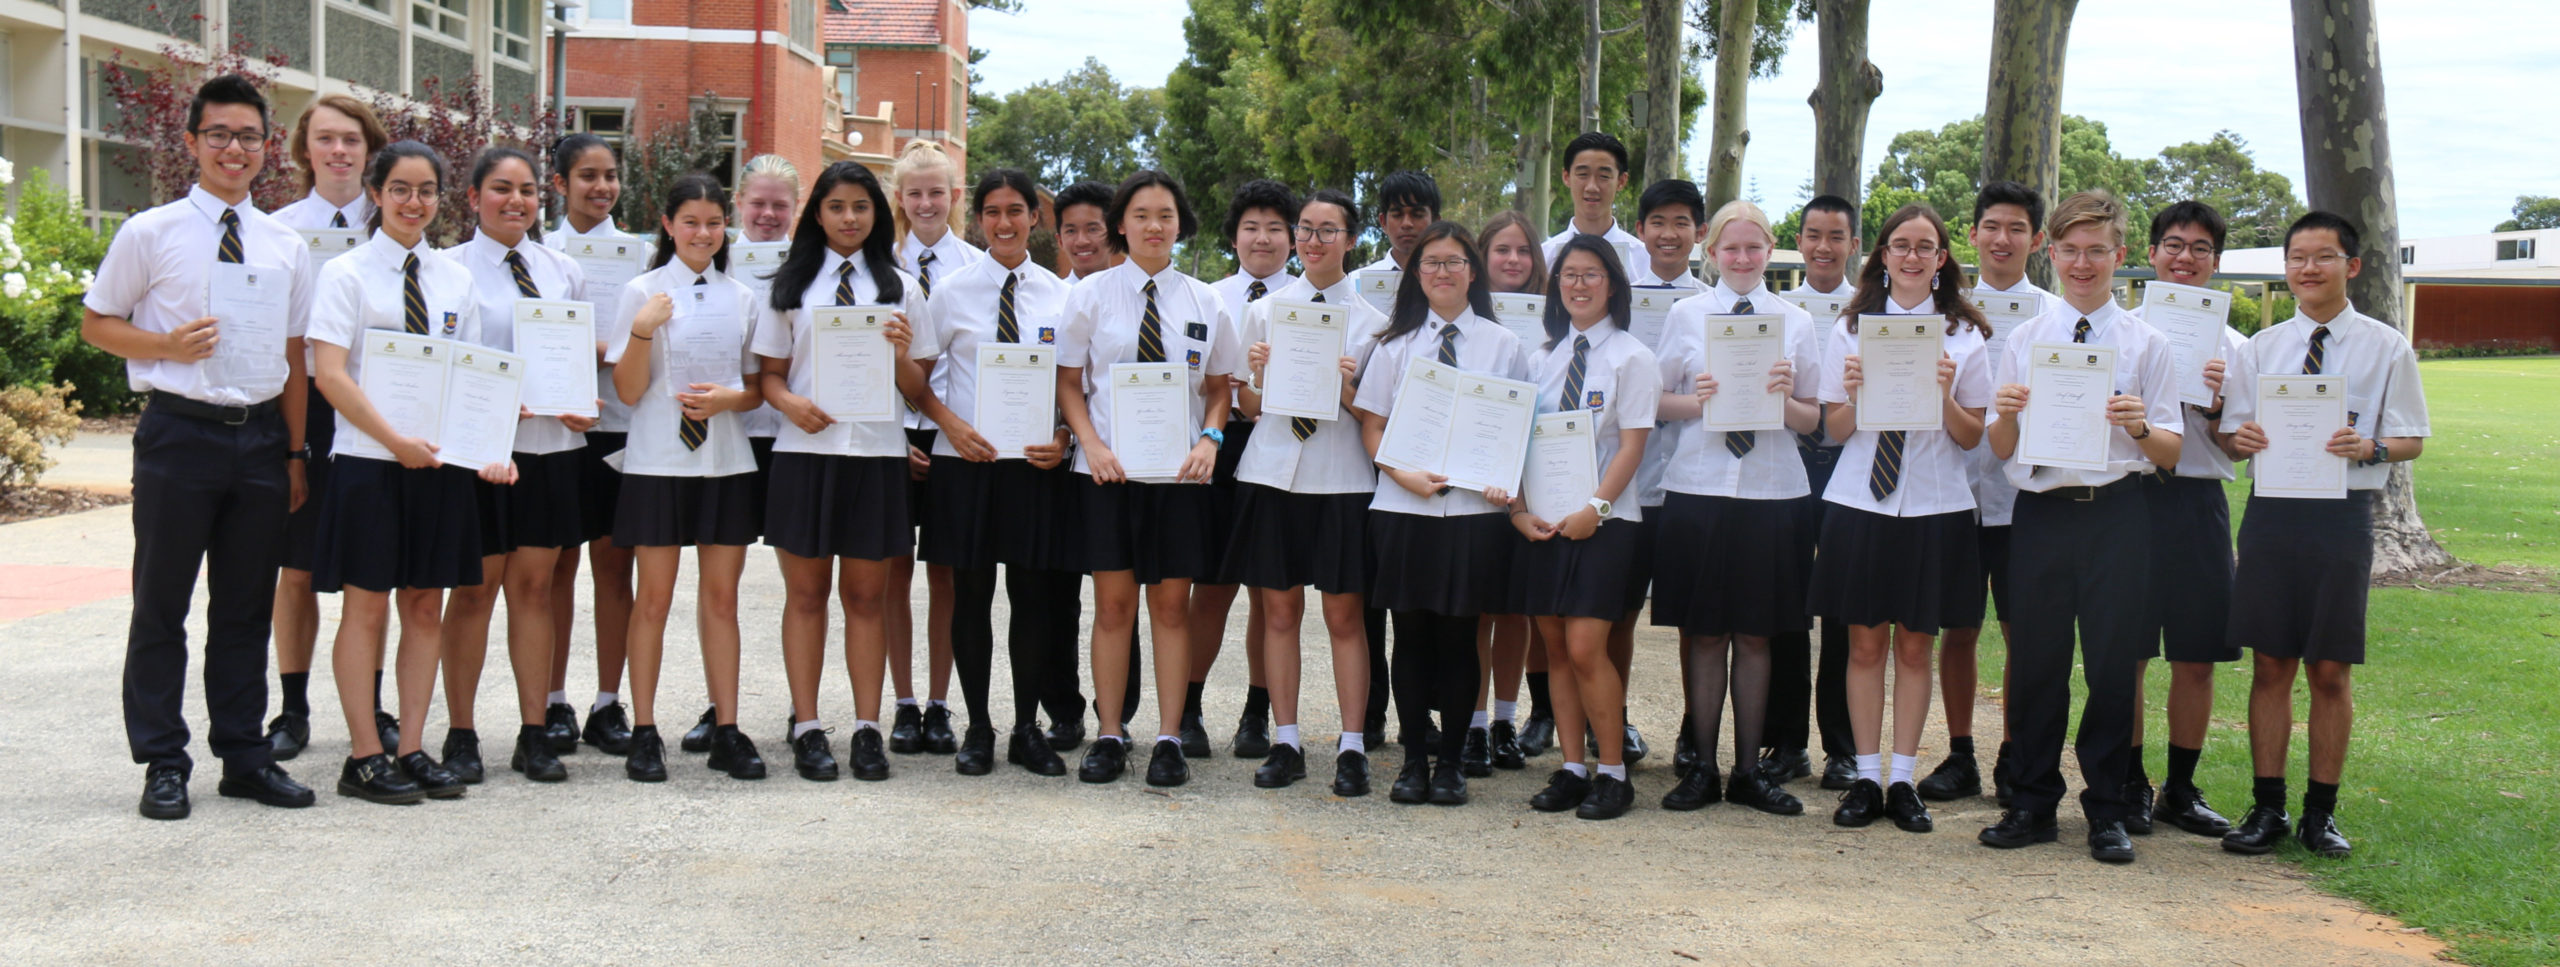 school uniform suppliers in Perth